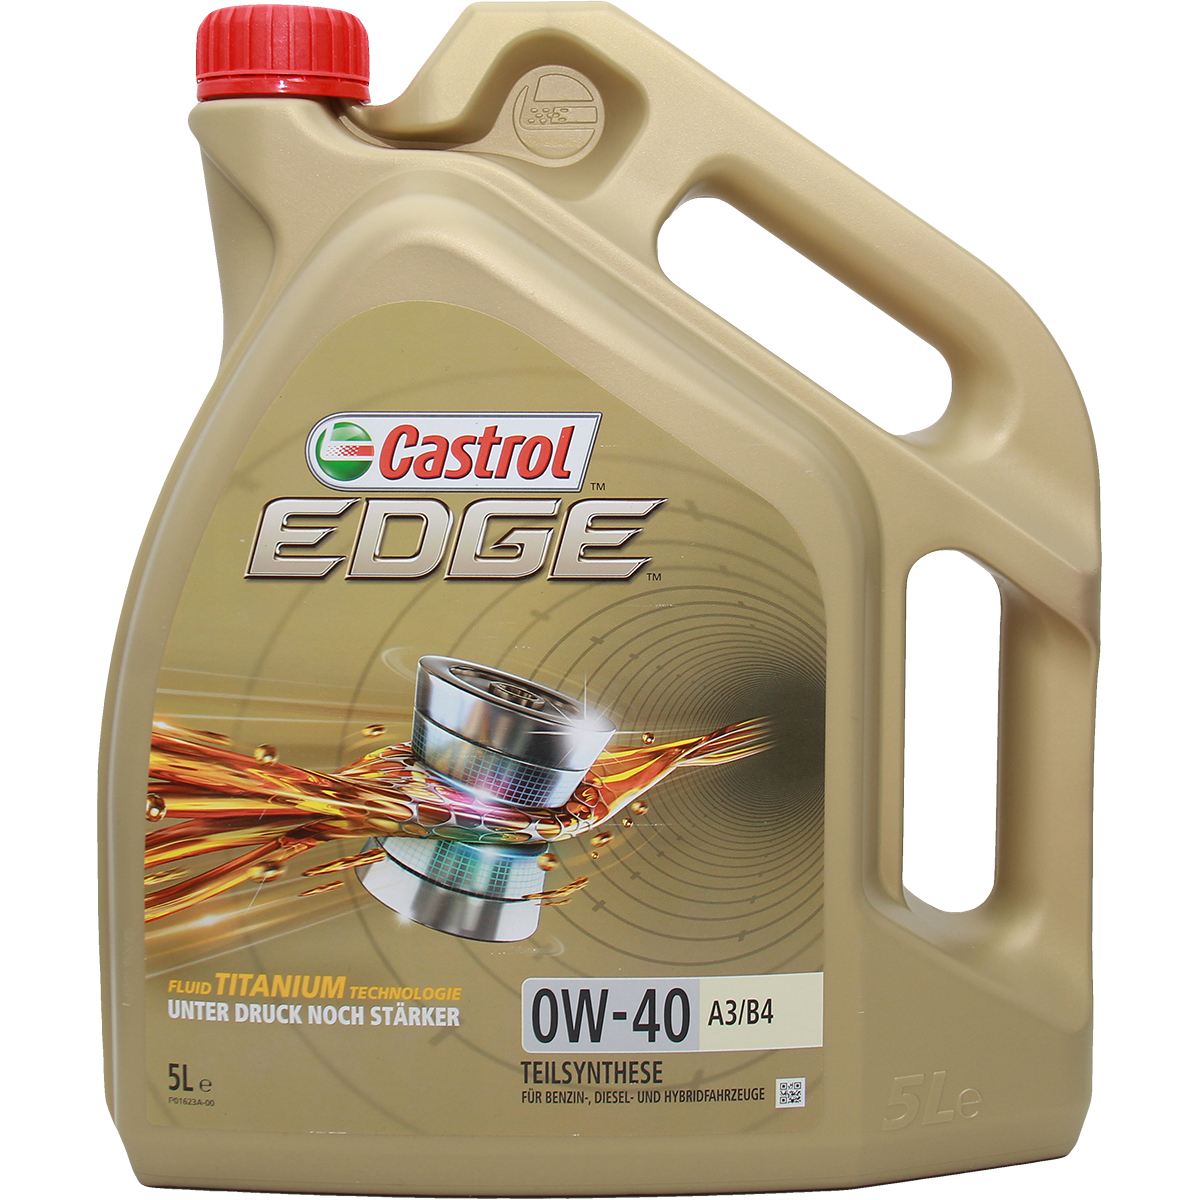 Castrol Edge Fluid Titanium 0W-40 A3/B4 5+1 Liter